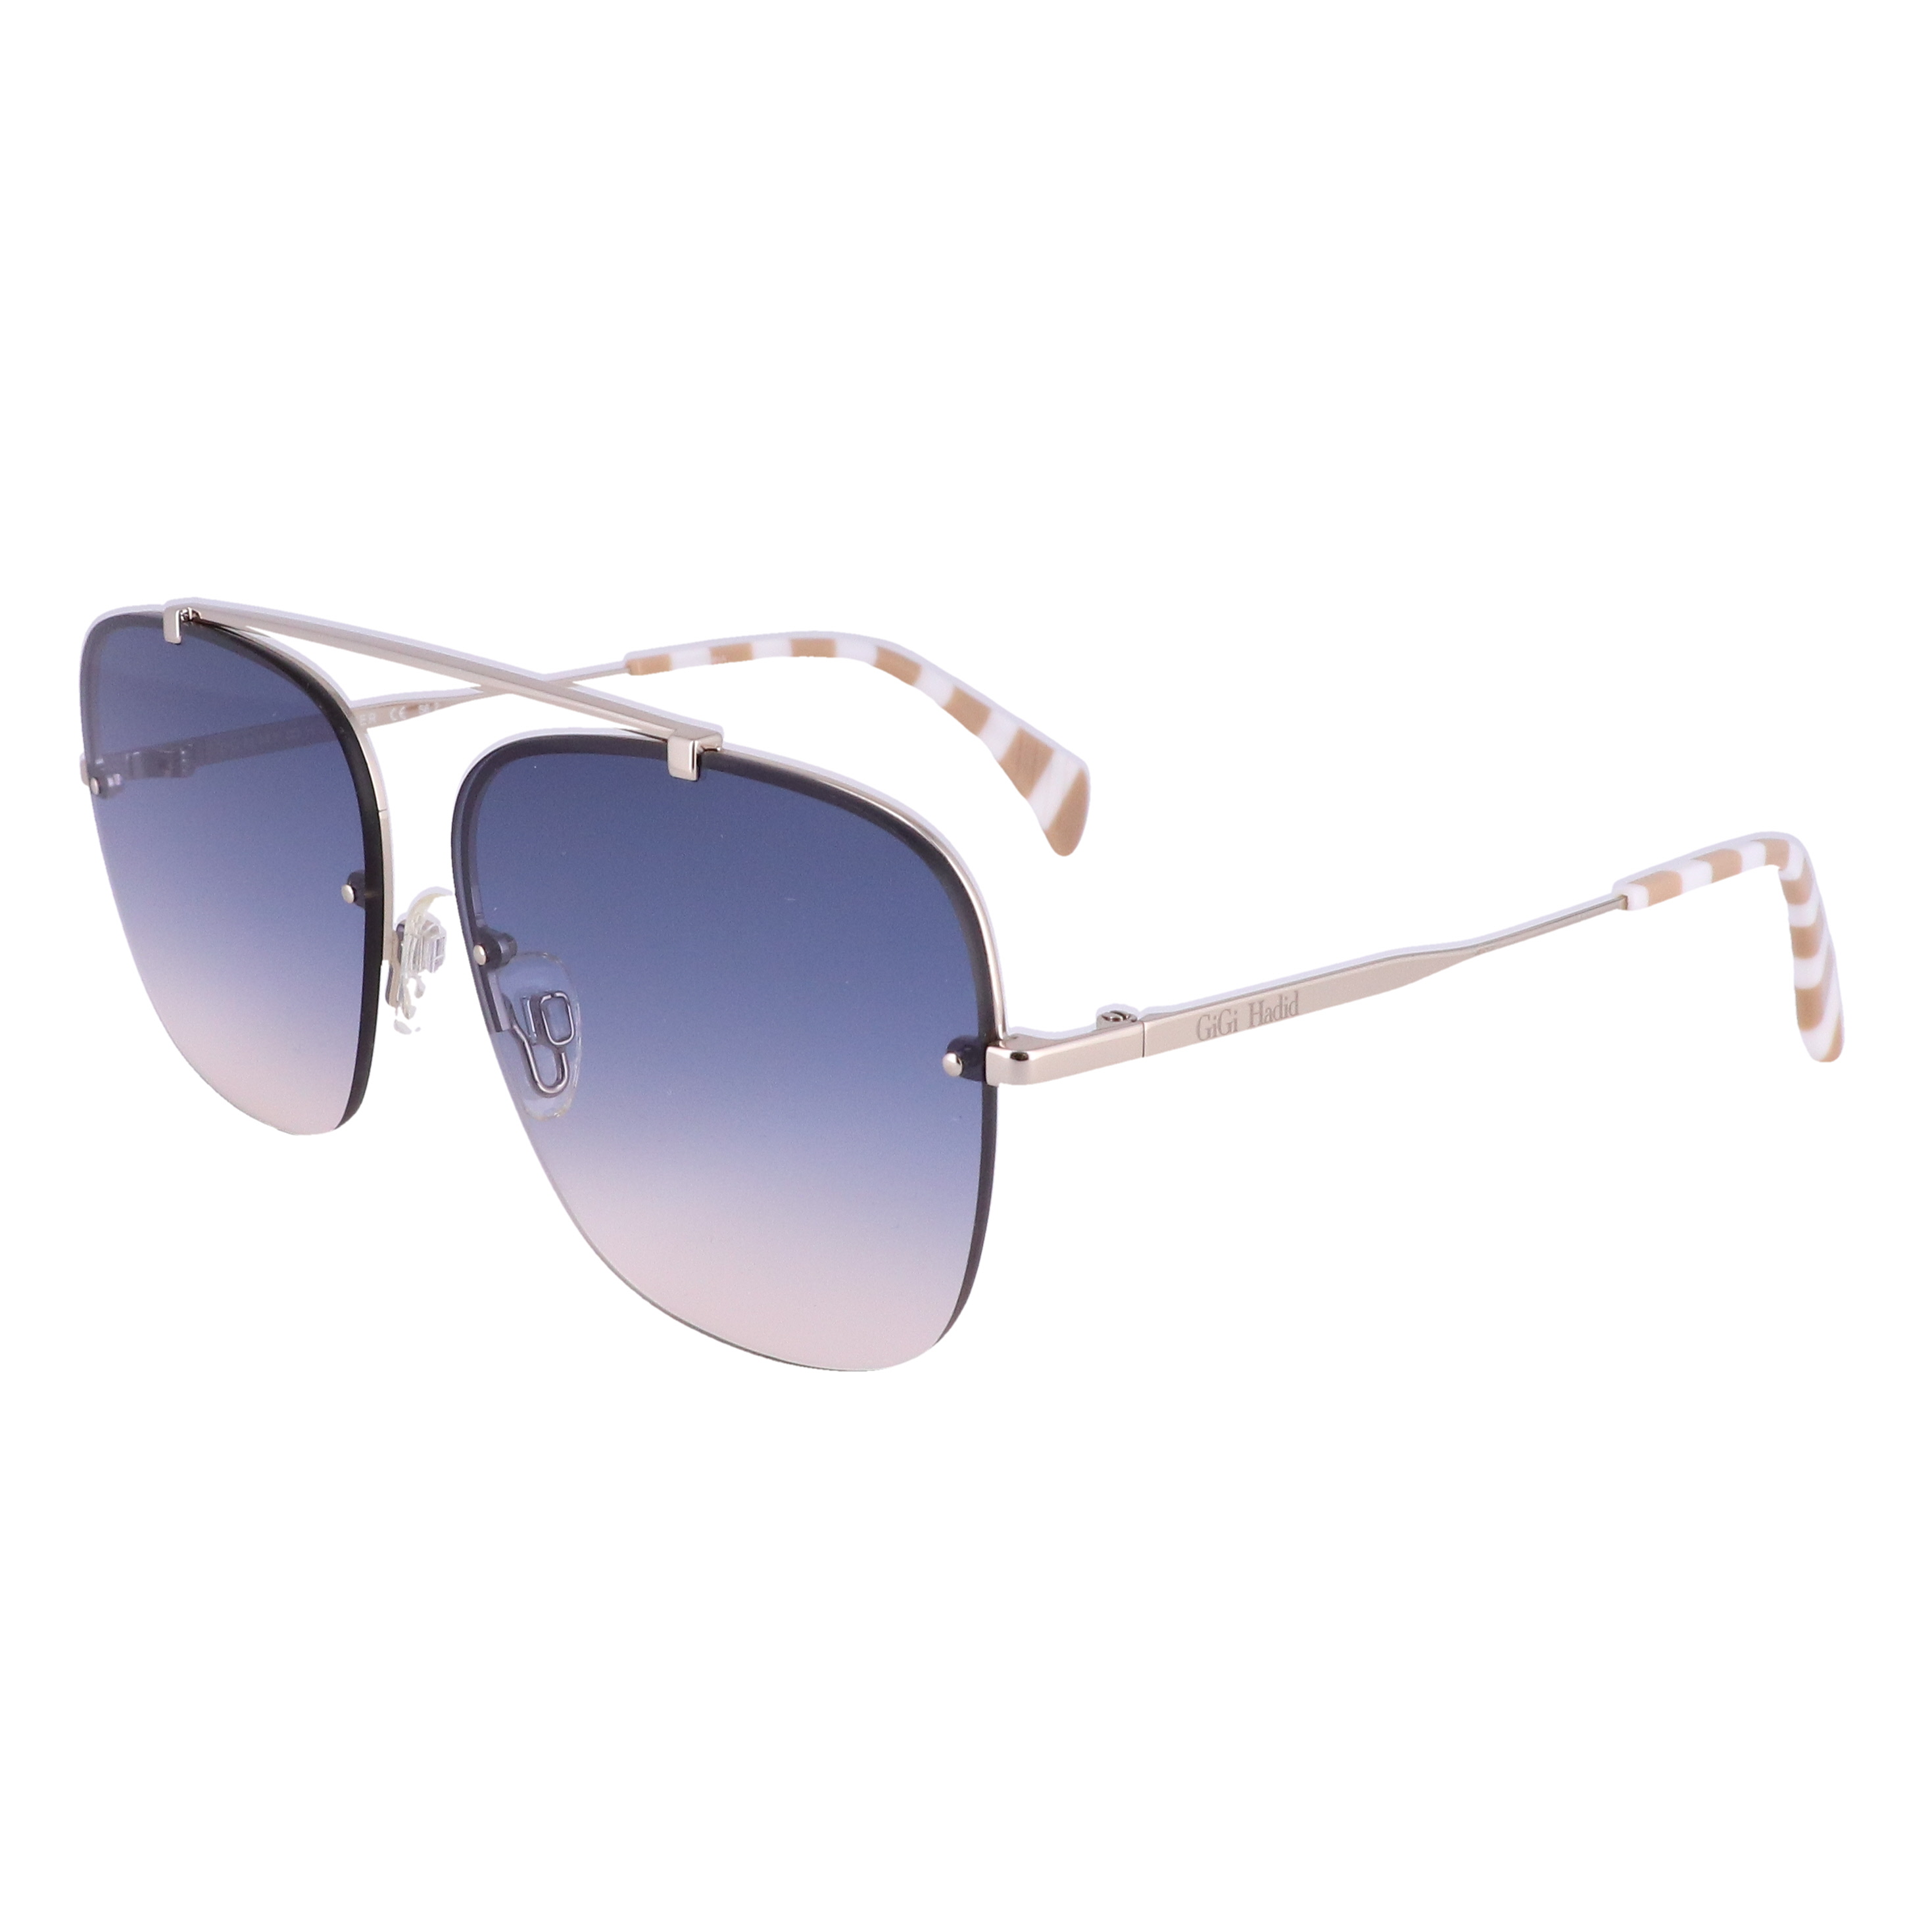 Sunglasses Tommy Hilfiger Th Gigi Hadid 2 03YG Lgh Gold / I4 Blue Gradient Lens - image 1 of 4